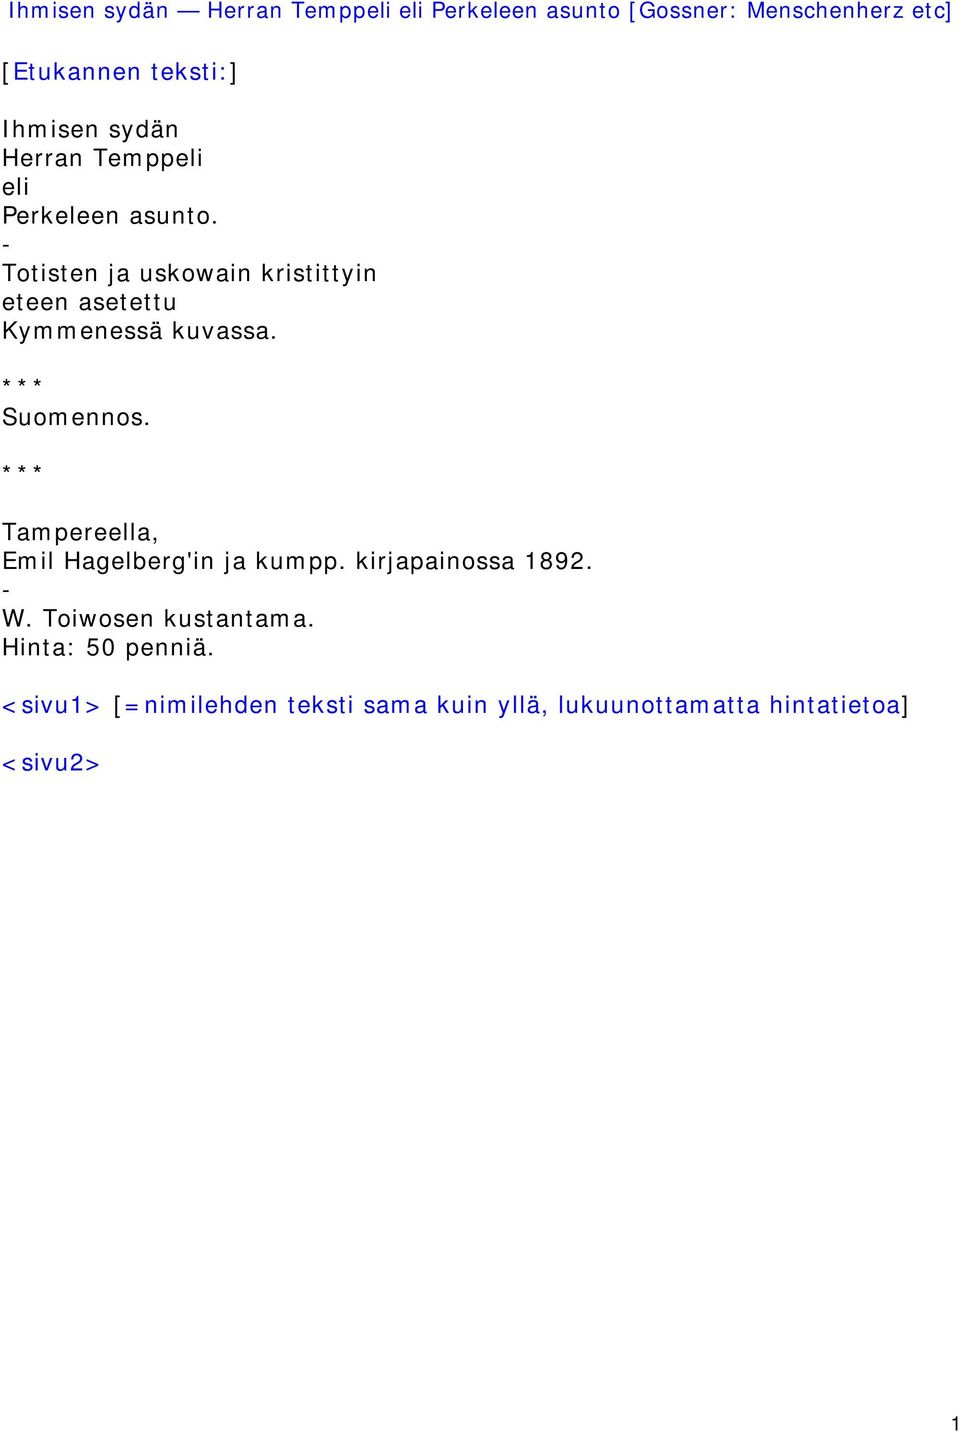 *** Tampereella, Emil Hagelberg'in ja kumpp. kirjapainossa 1892. - W.